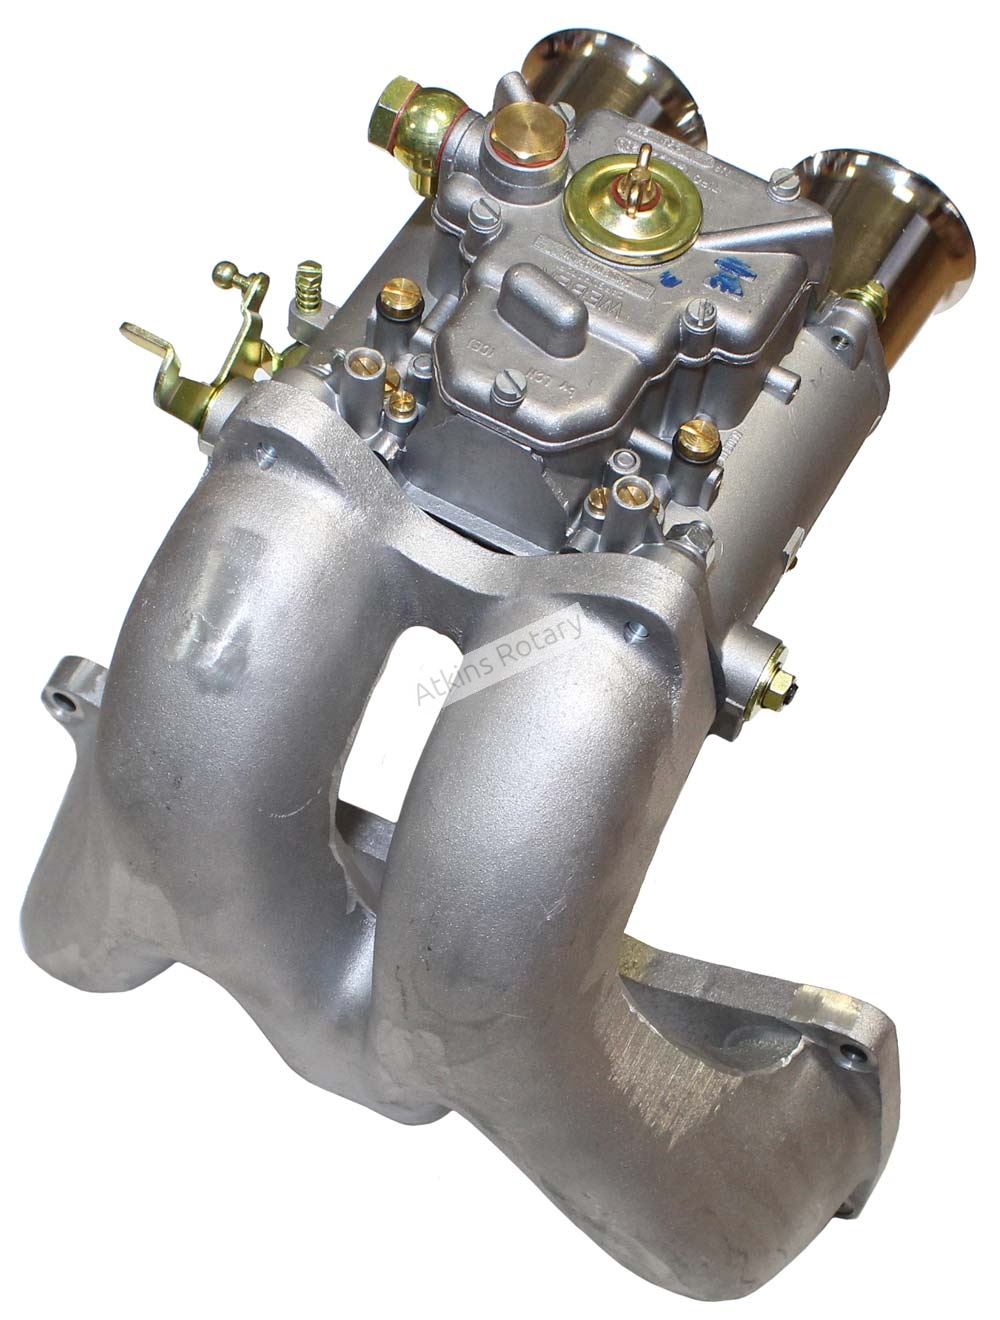 86-91 Rx7 Wrap Over Intake Manifold & Weber 45 DCOE Carburetor Kit (ARE705K45)